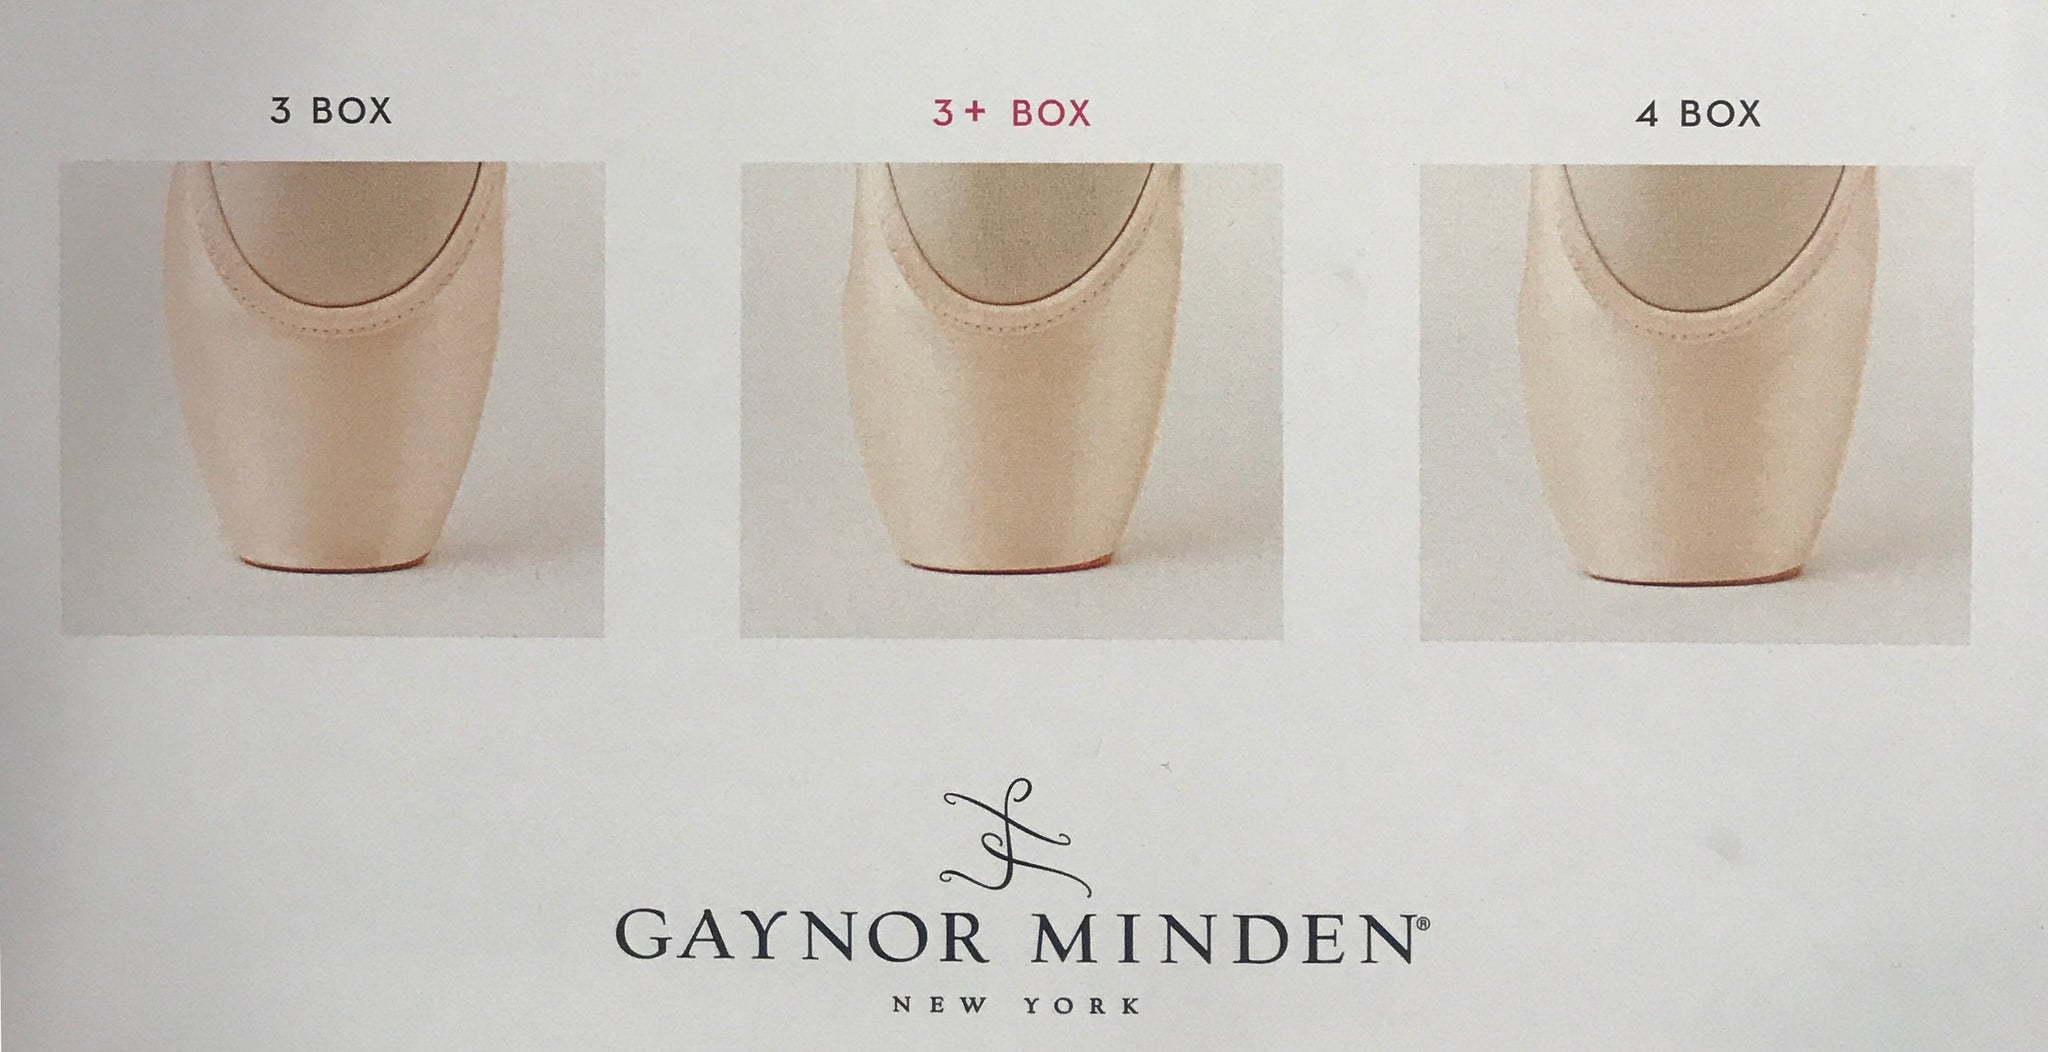 Gaynor Minden Sculpted Fit, 4 Box 